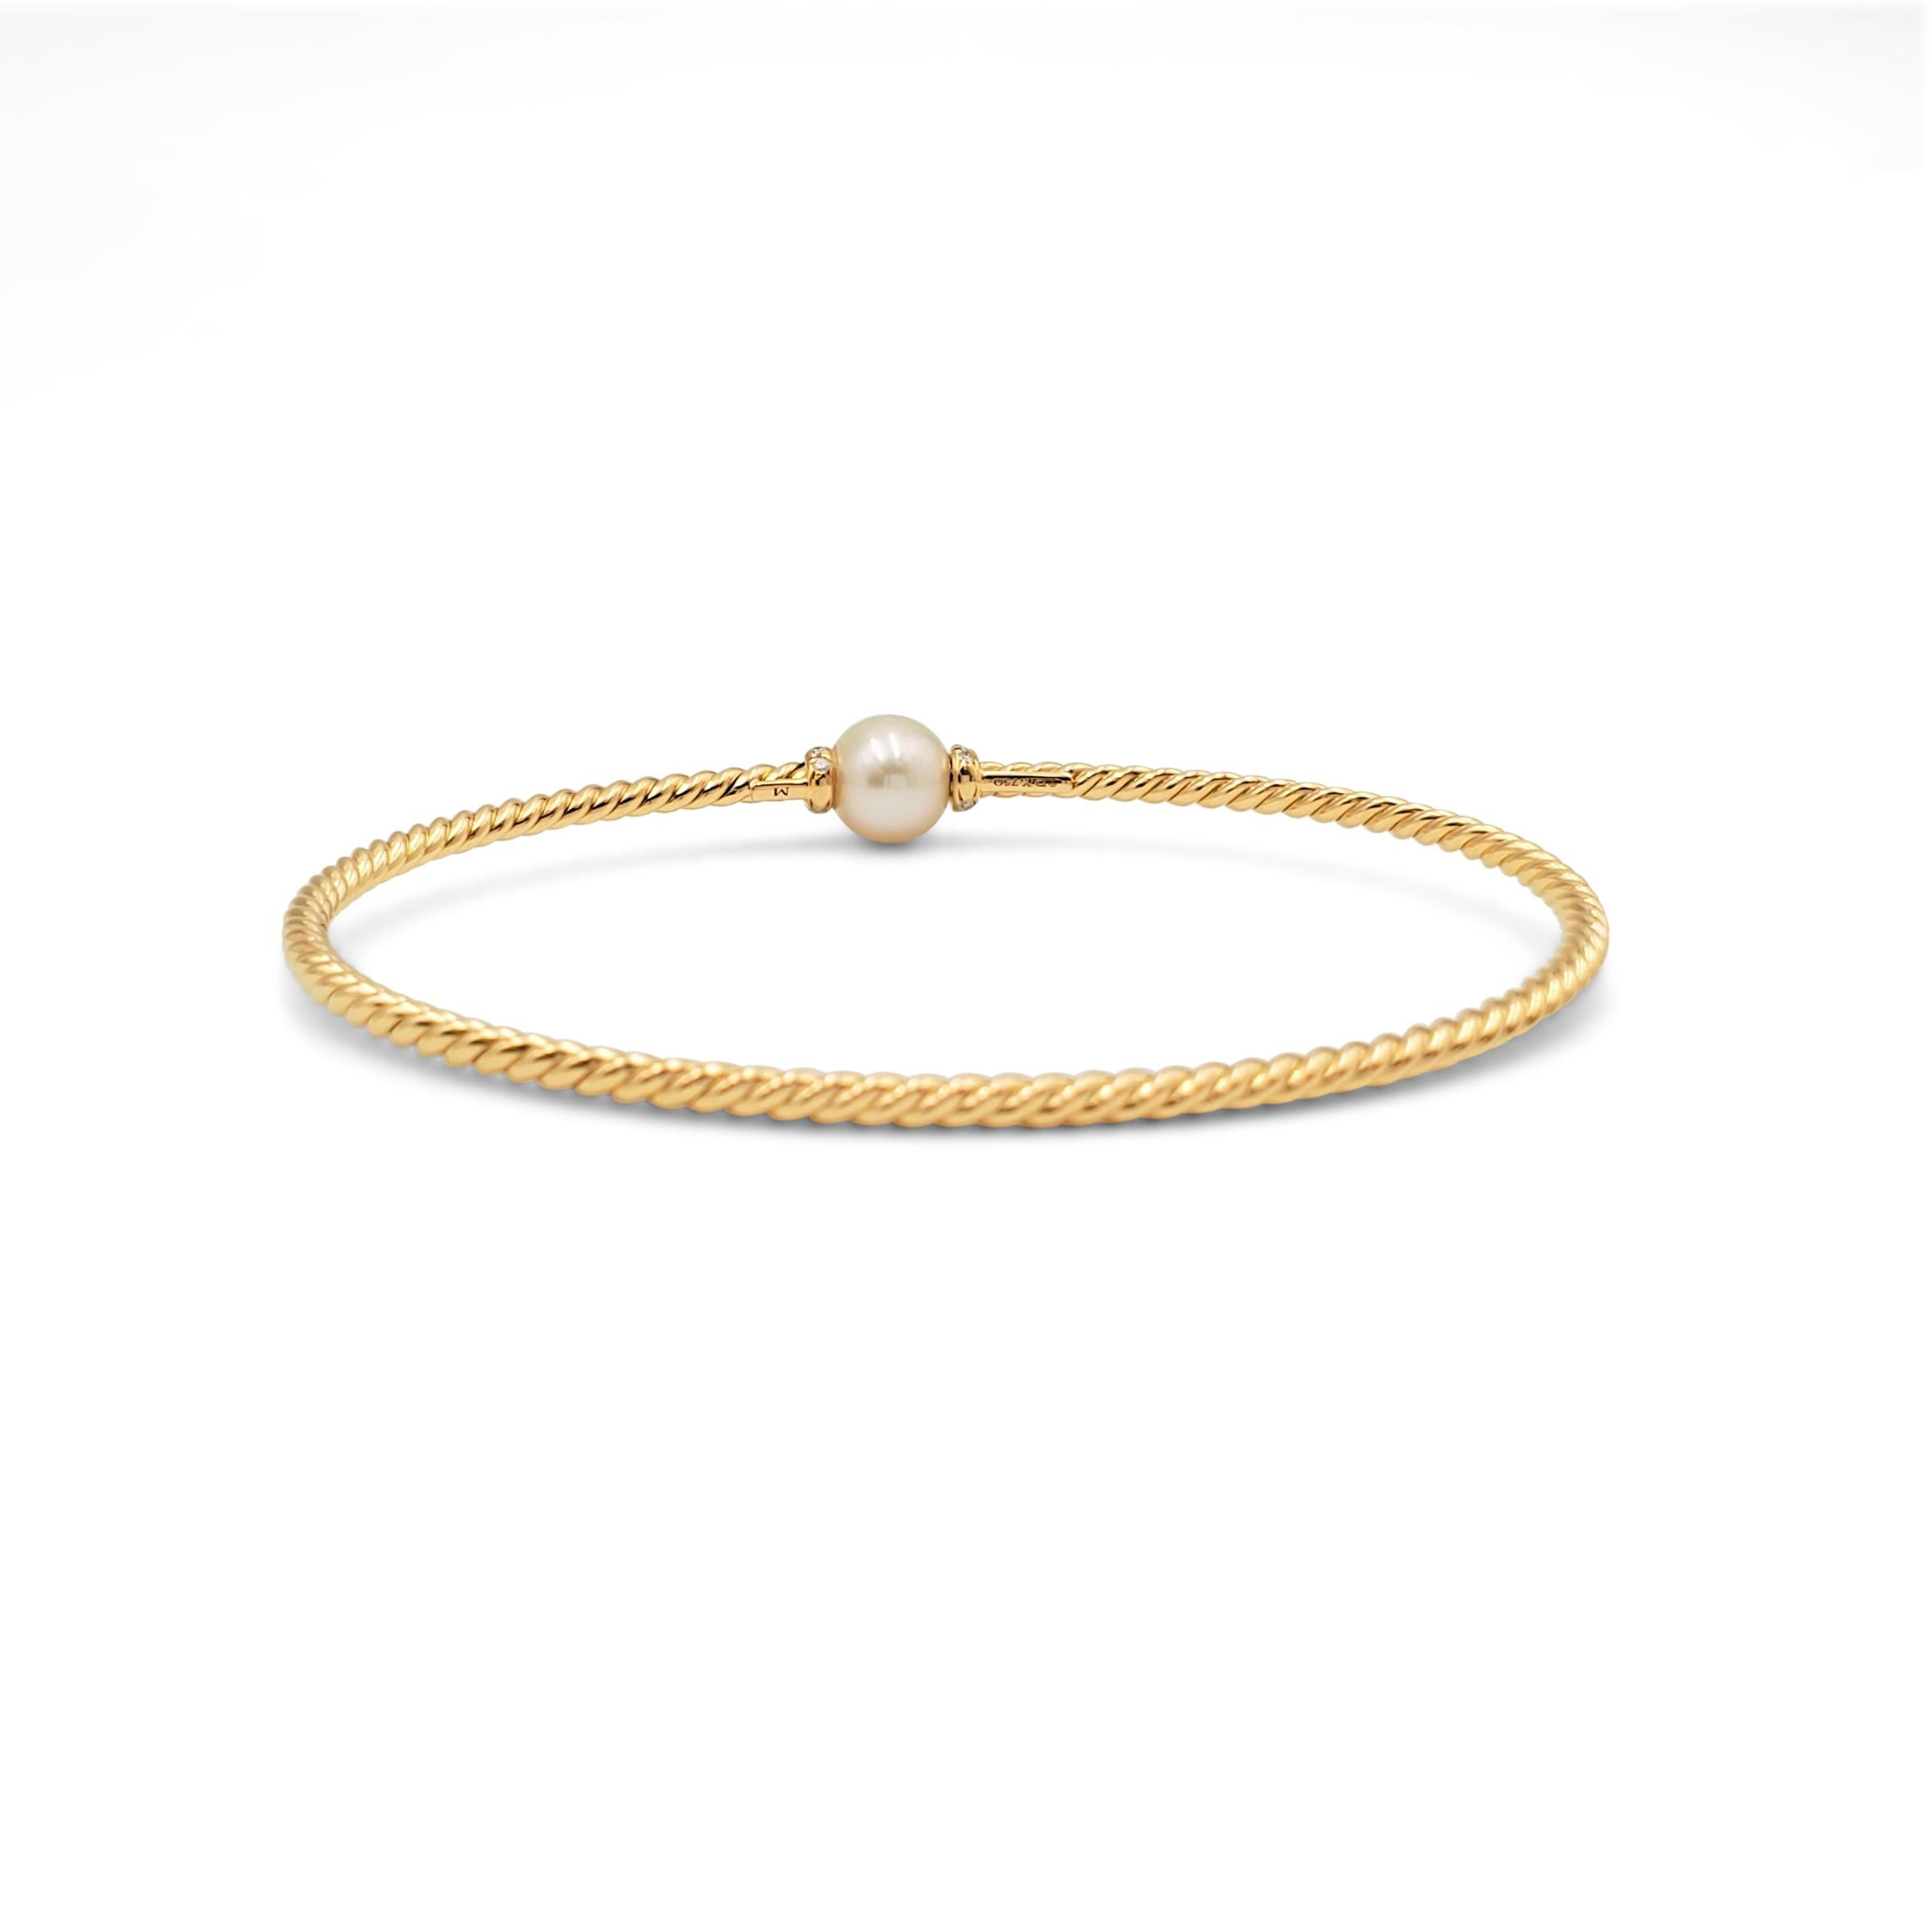 Round Cut David Yurman 'Petite Solari' Station Bracelet with Cultured Pearl and Diamonds